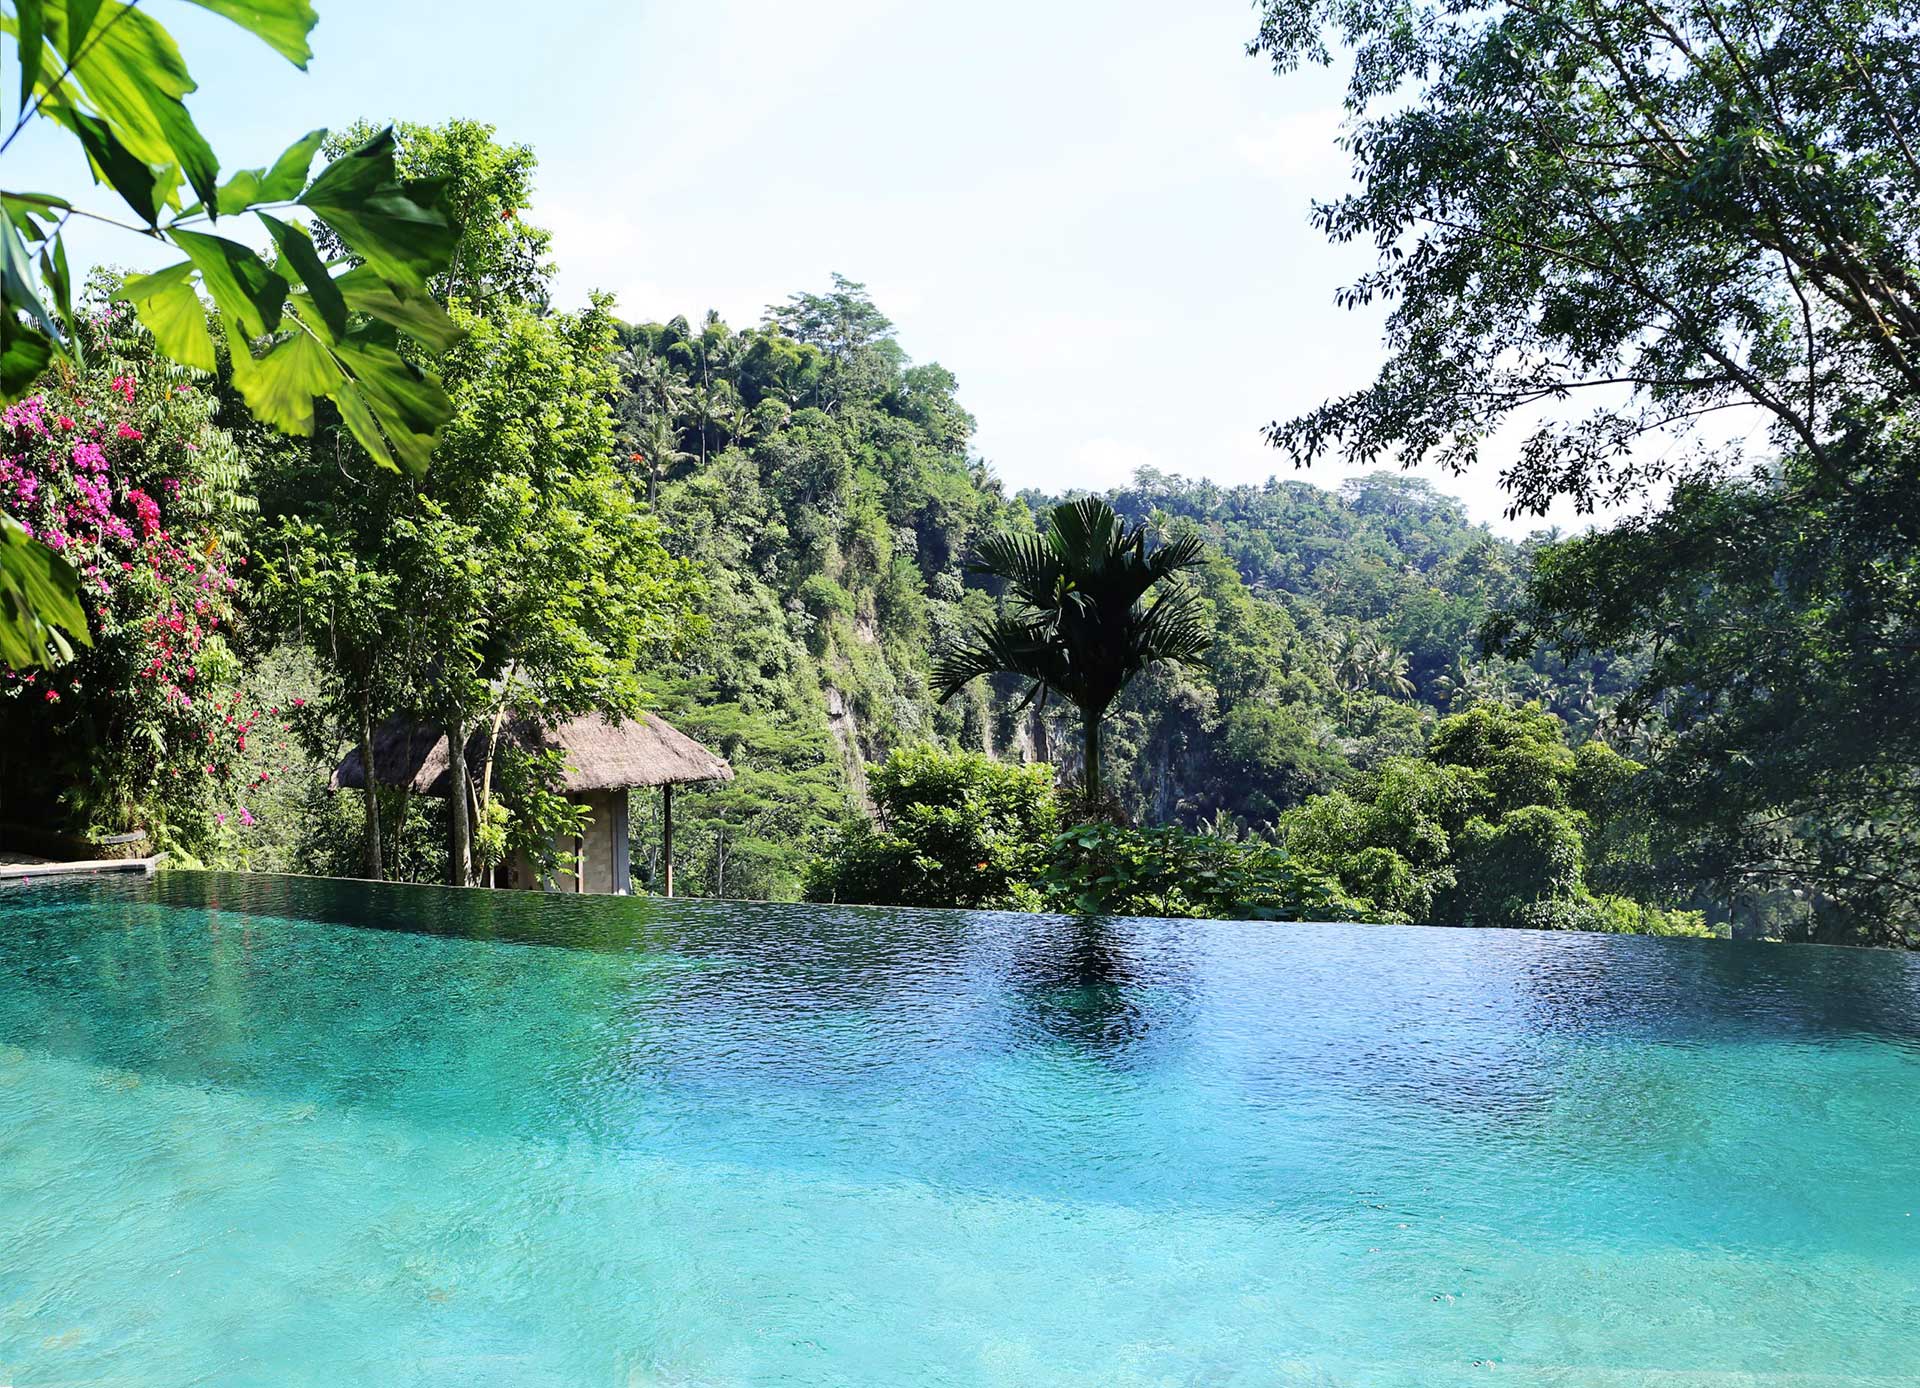 Pool in the Jungle Sri Lanka